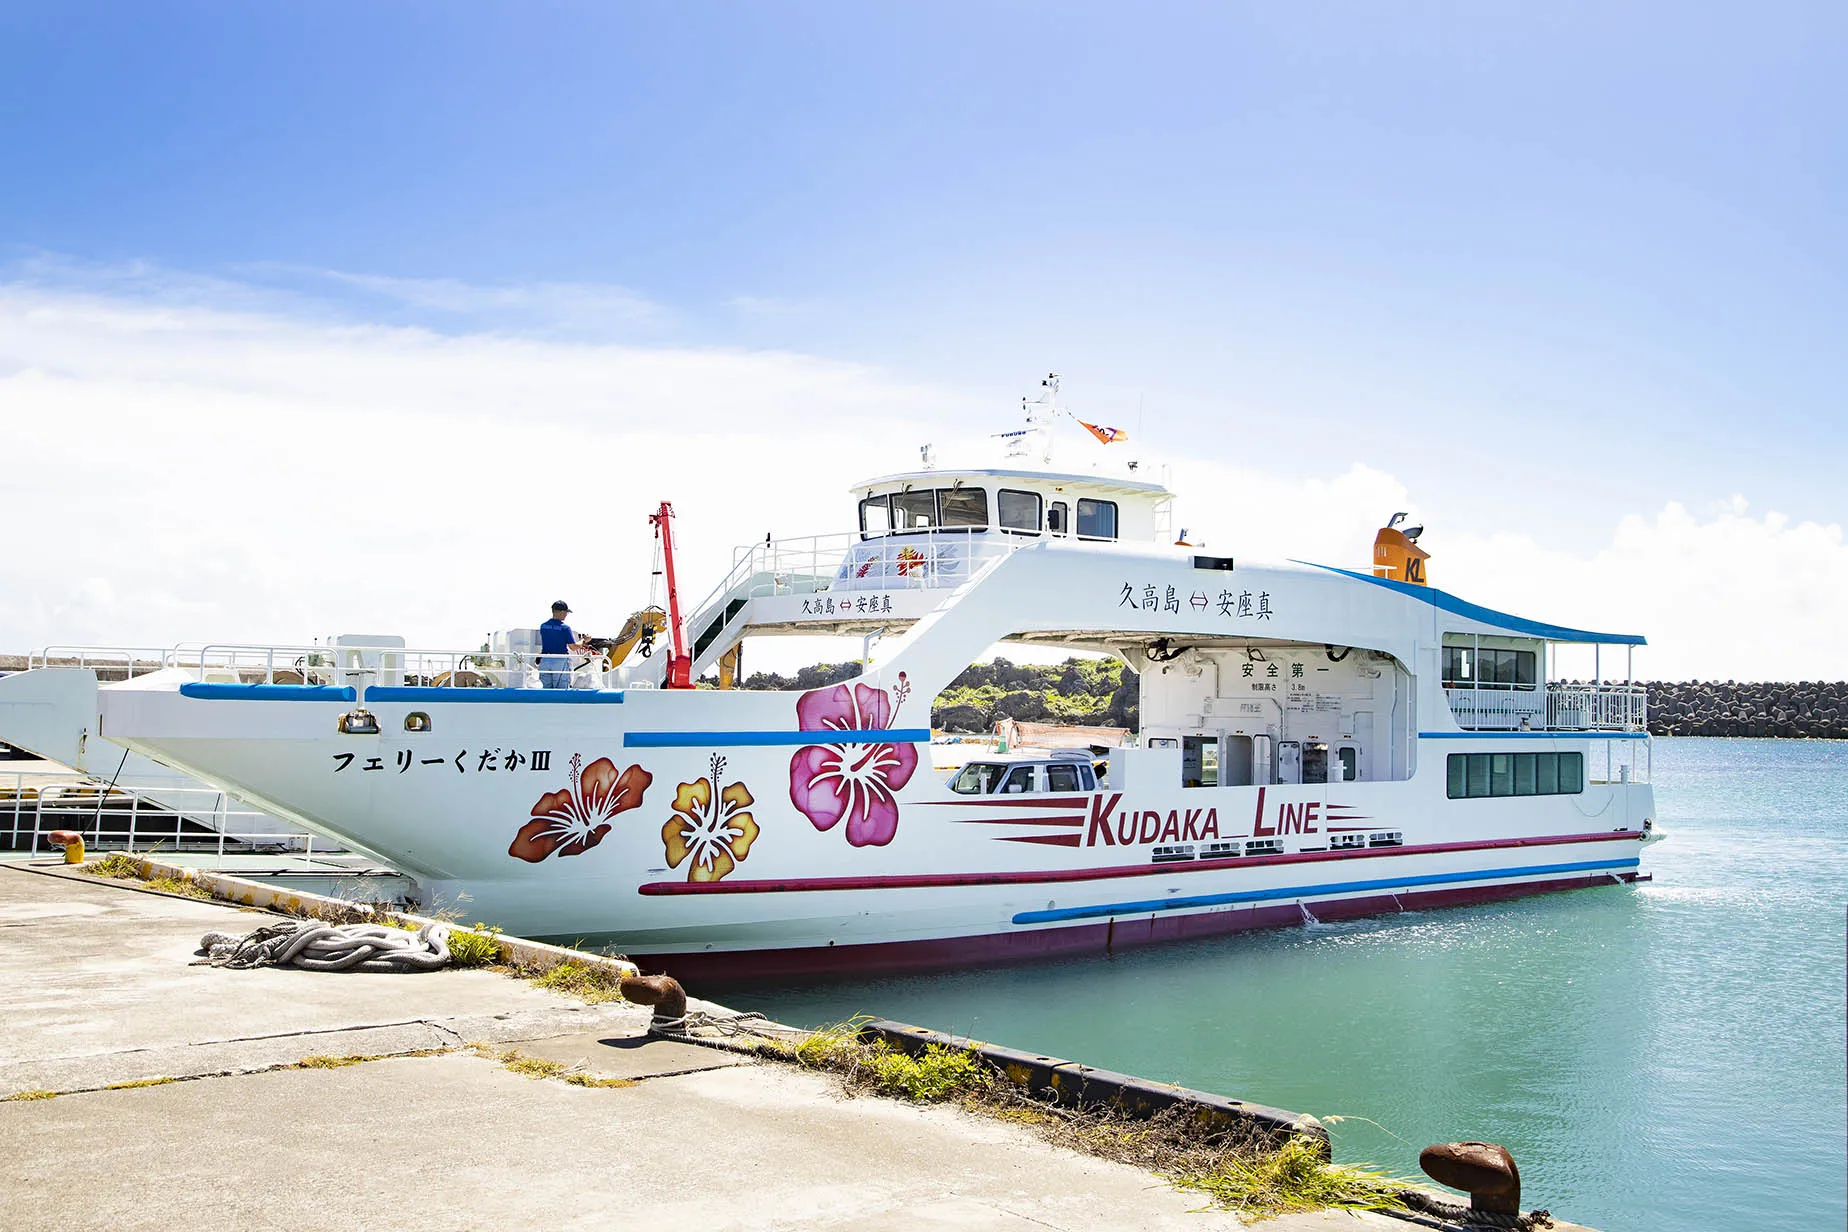 okinawa express ferry